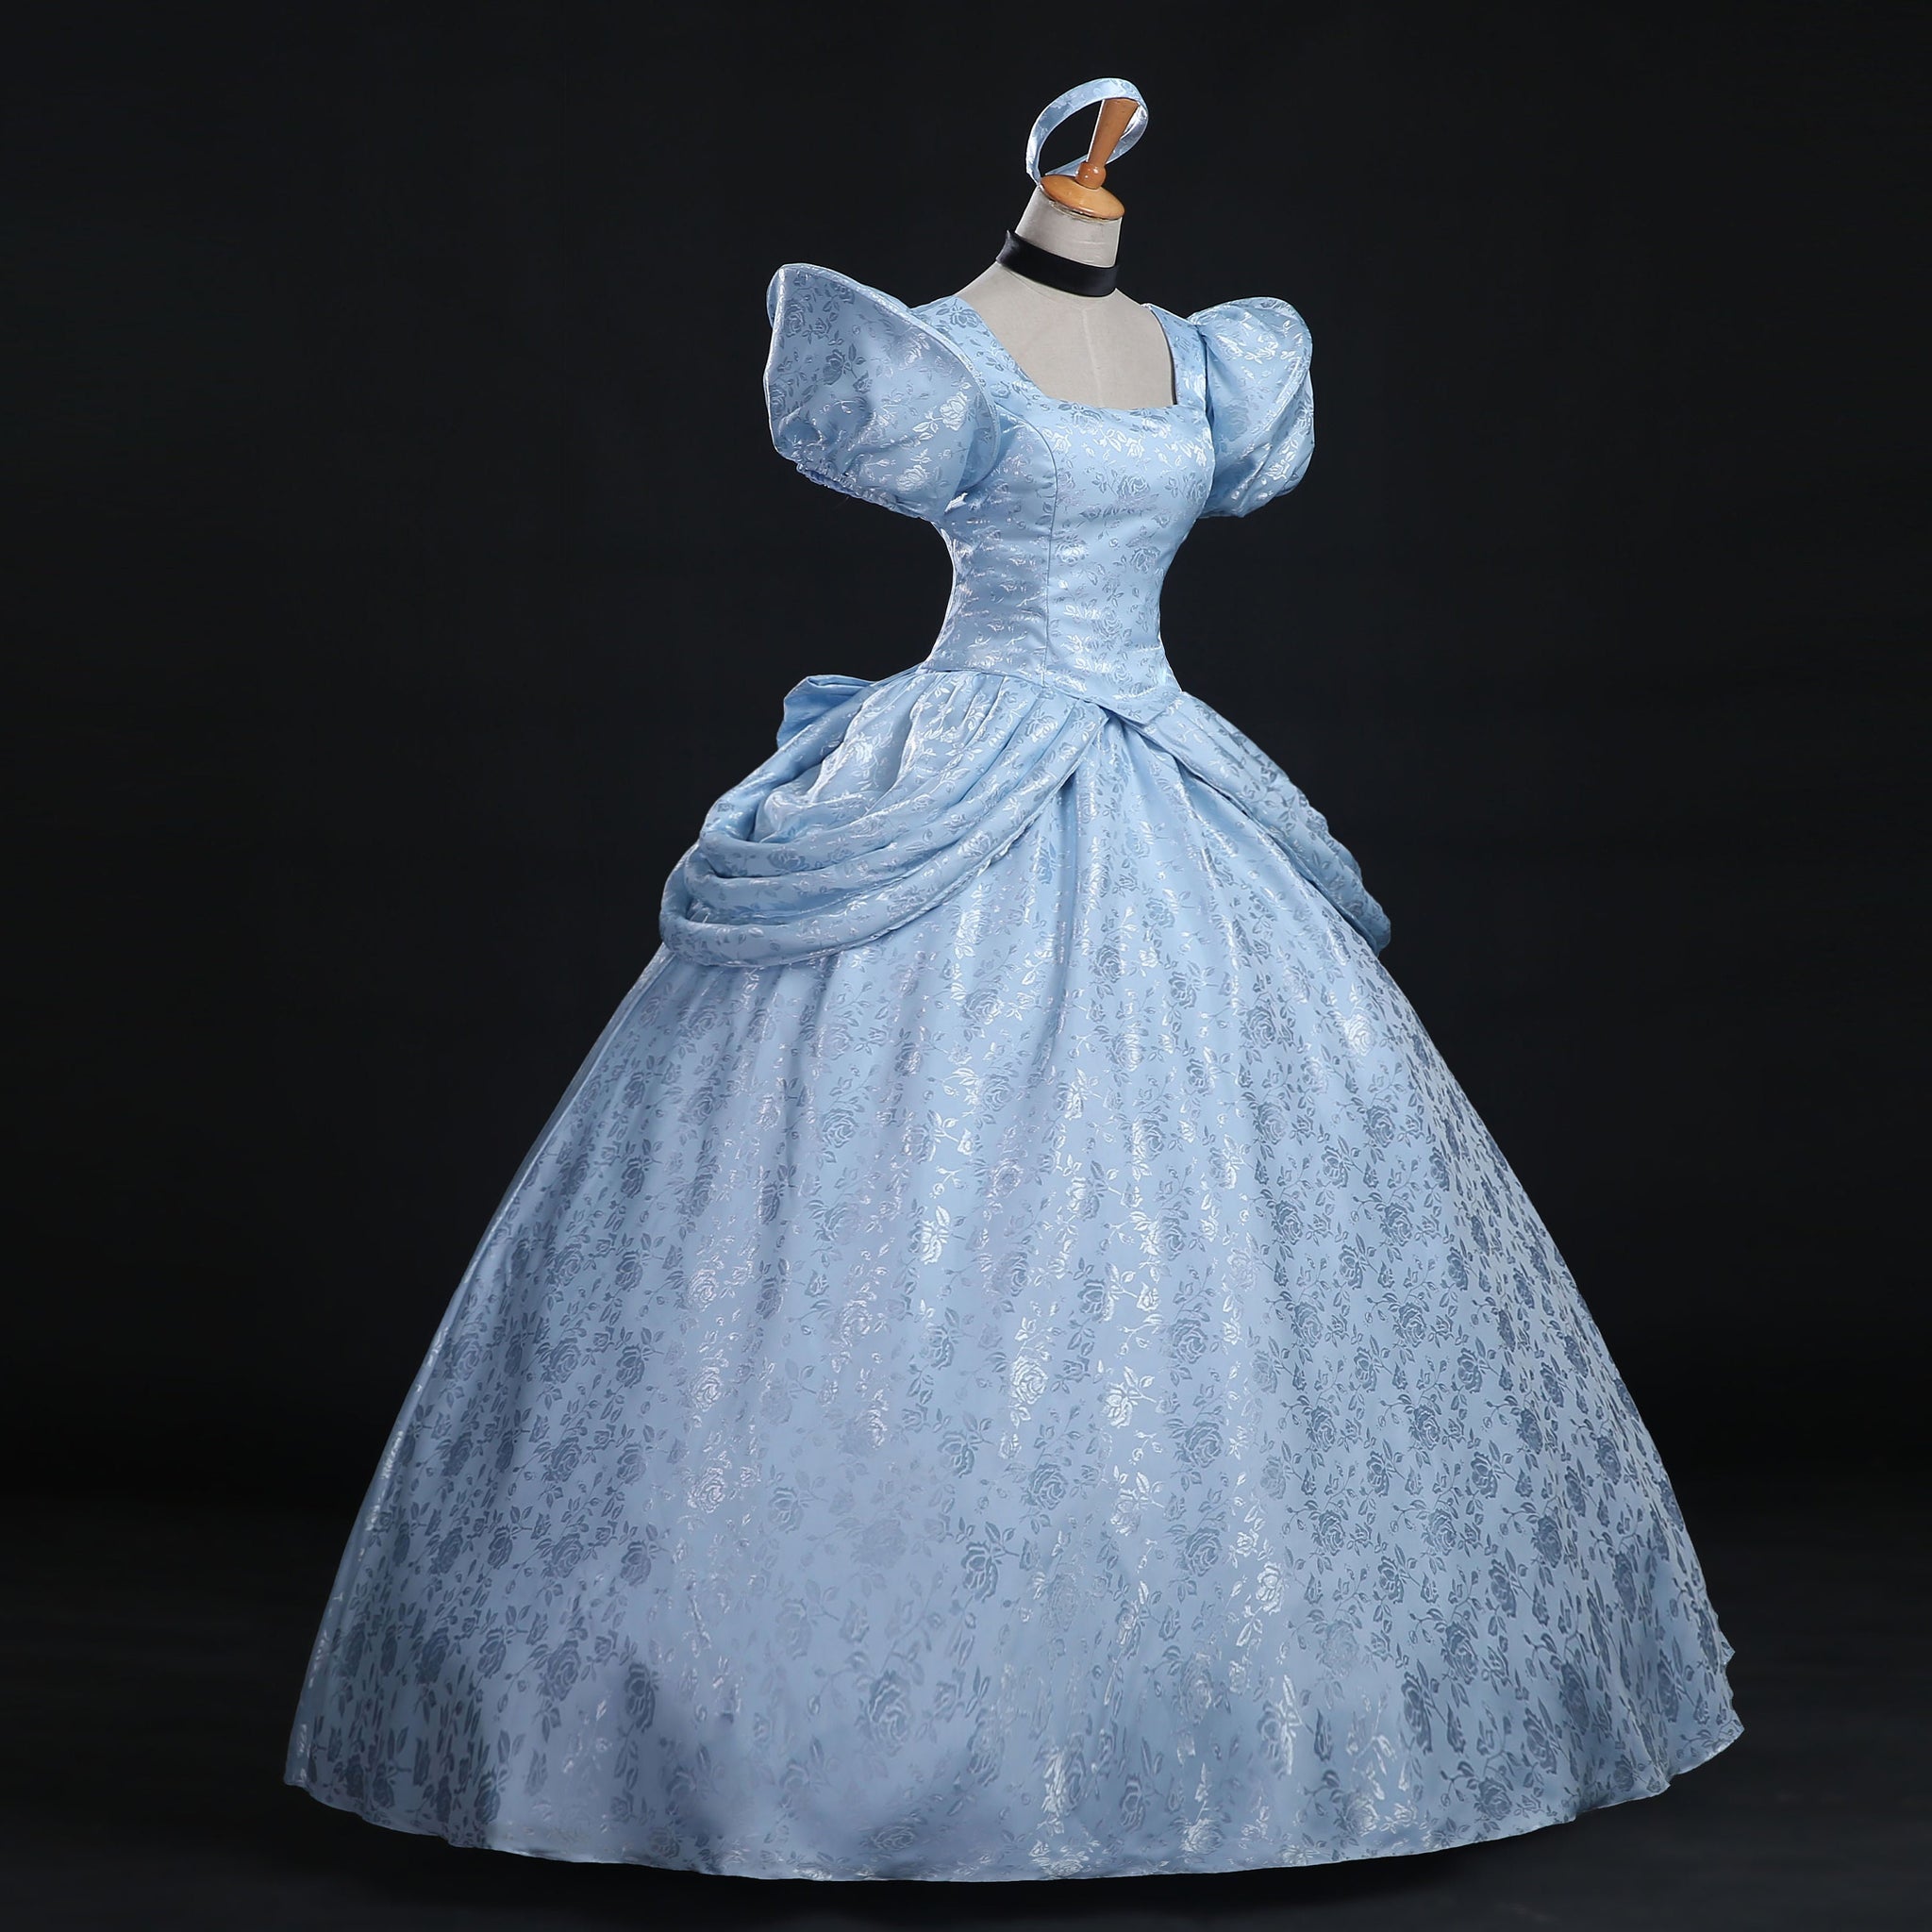 Luxury Cinderella costume